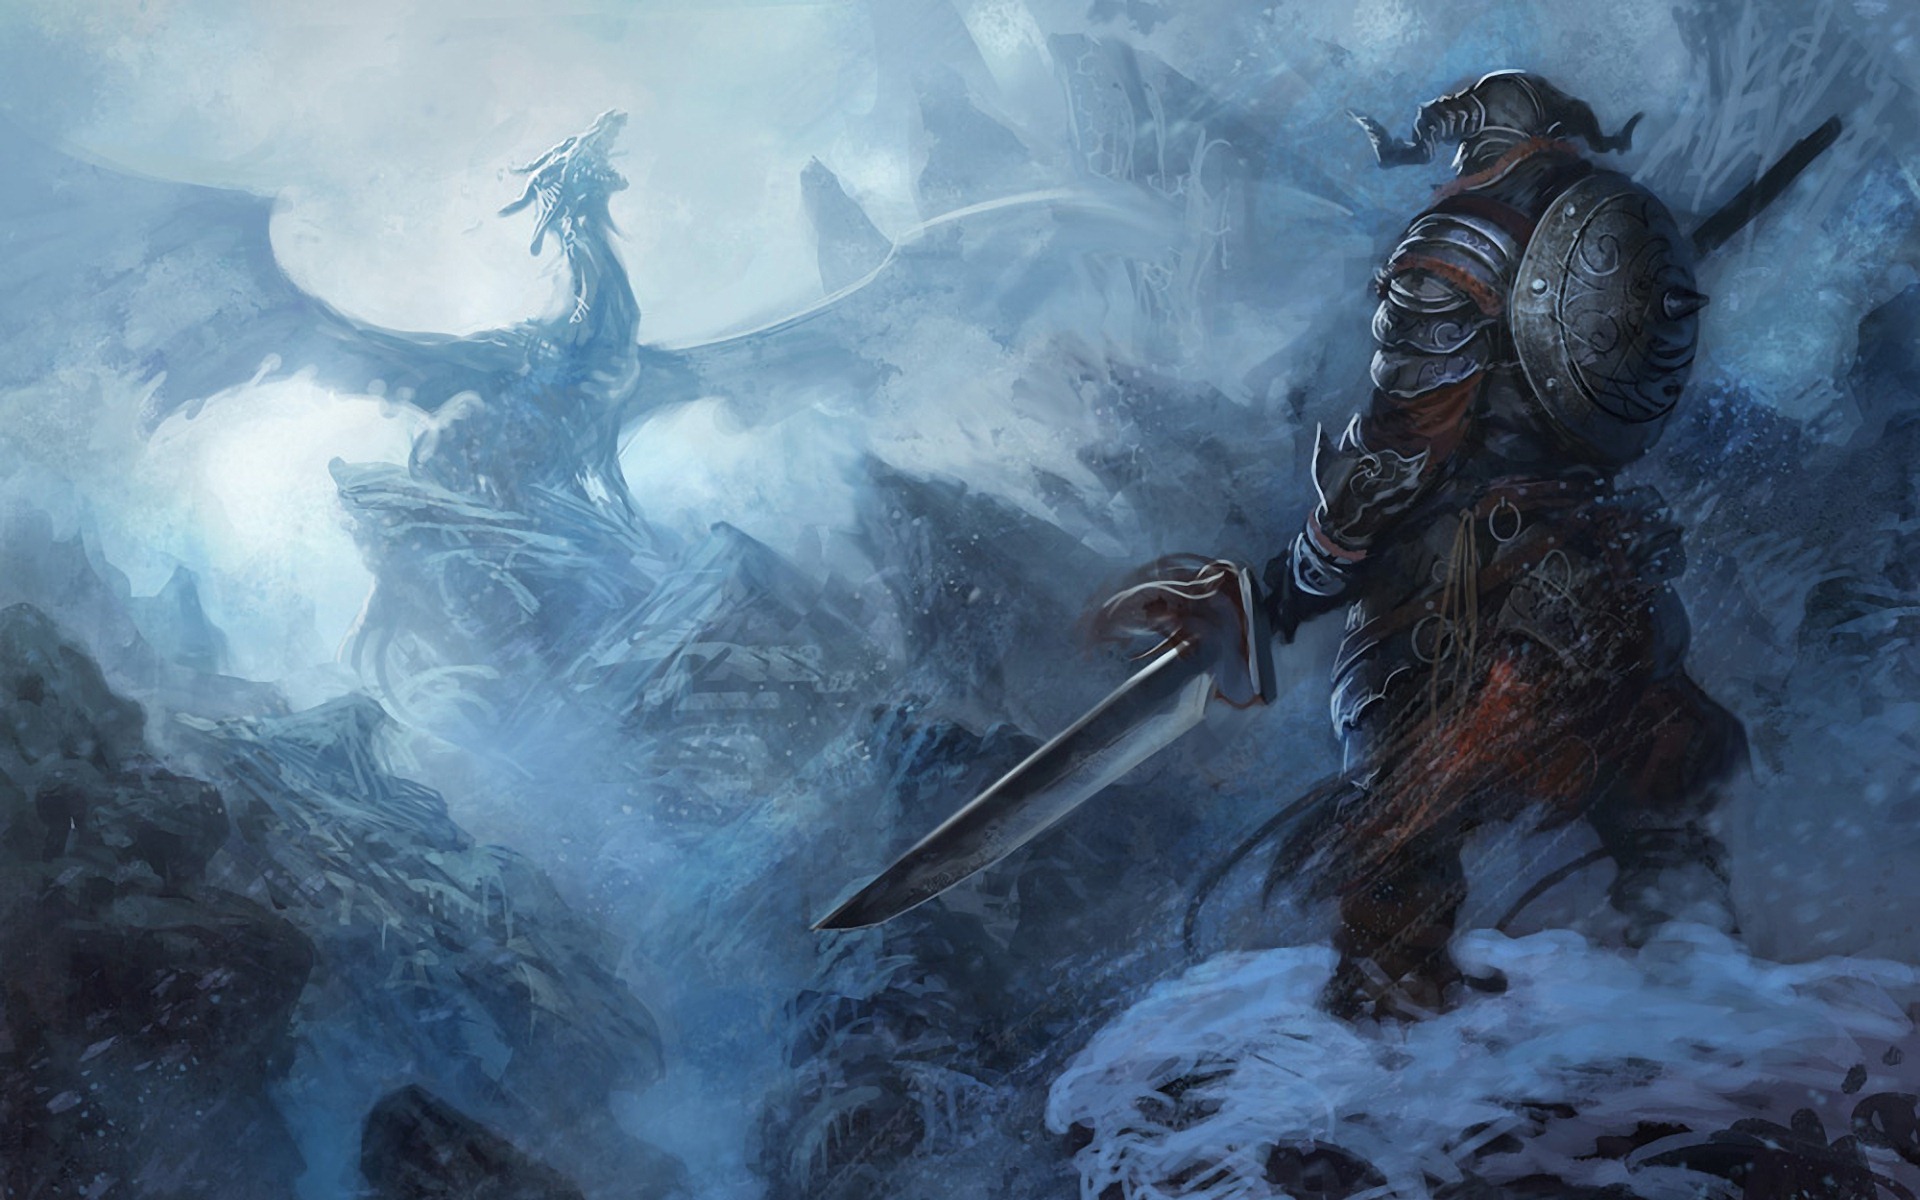 Download The Elder Scrolls Giant Enemy Game Wallpaper High Definition (HD) Games Wallpaper